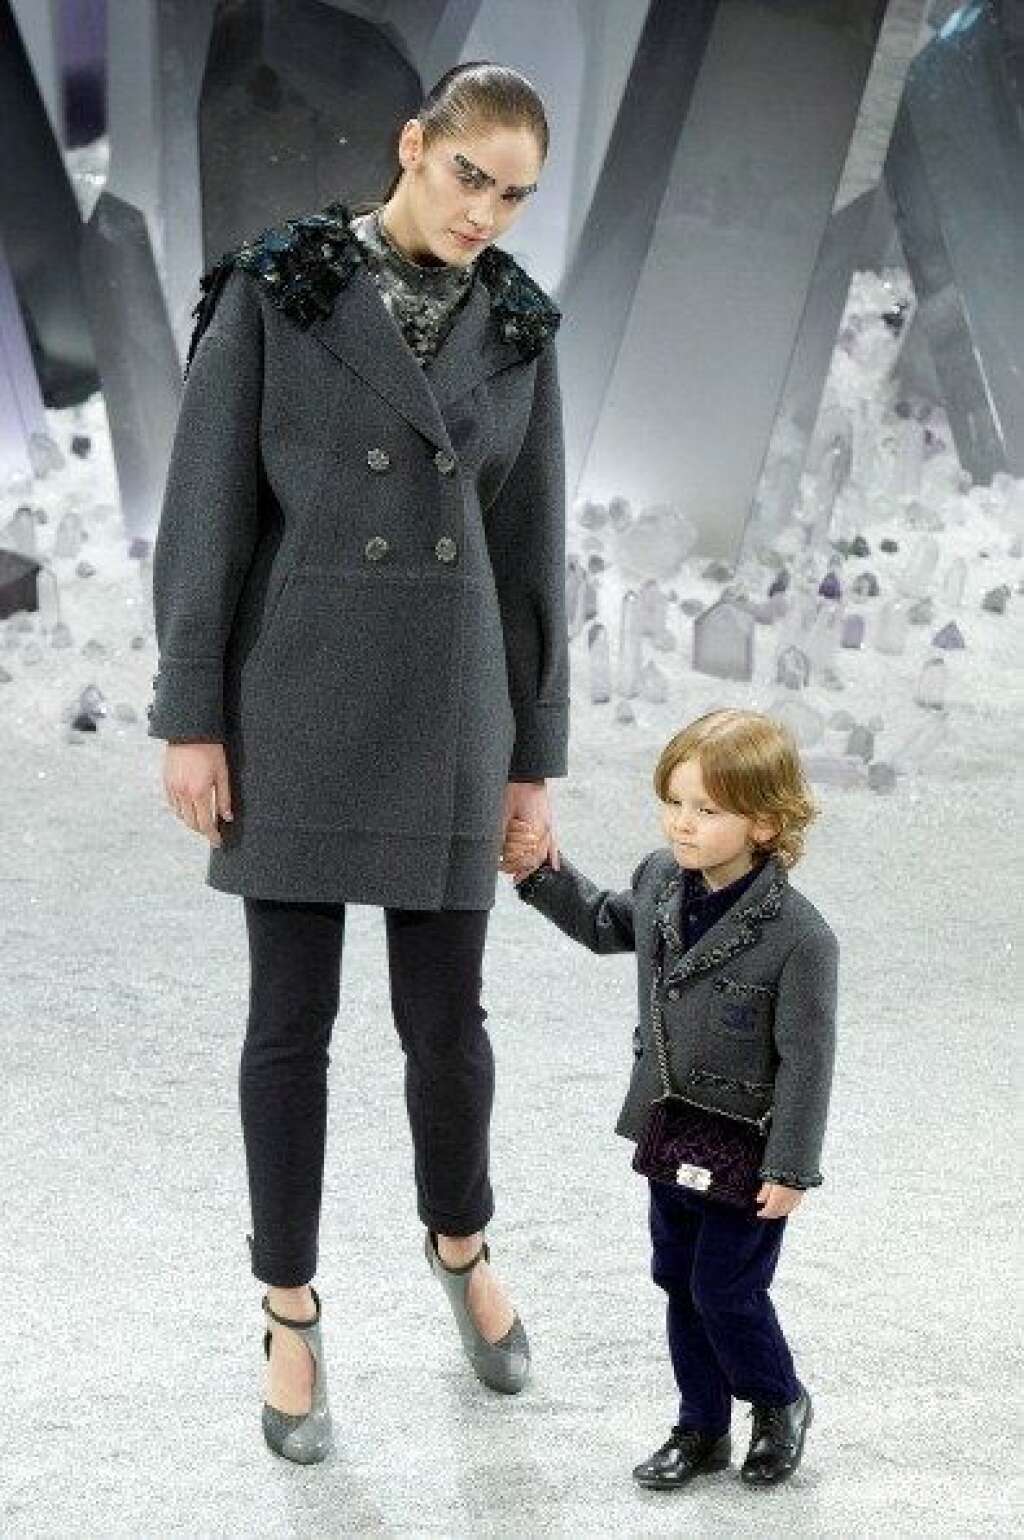 Hudson Kroenig, son of Brad Kroenig, at the Chanel Fall/Winter 2013 Show - (Getty Images)